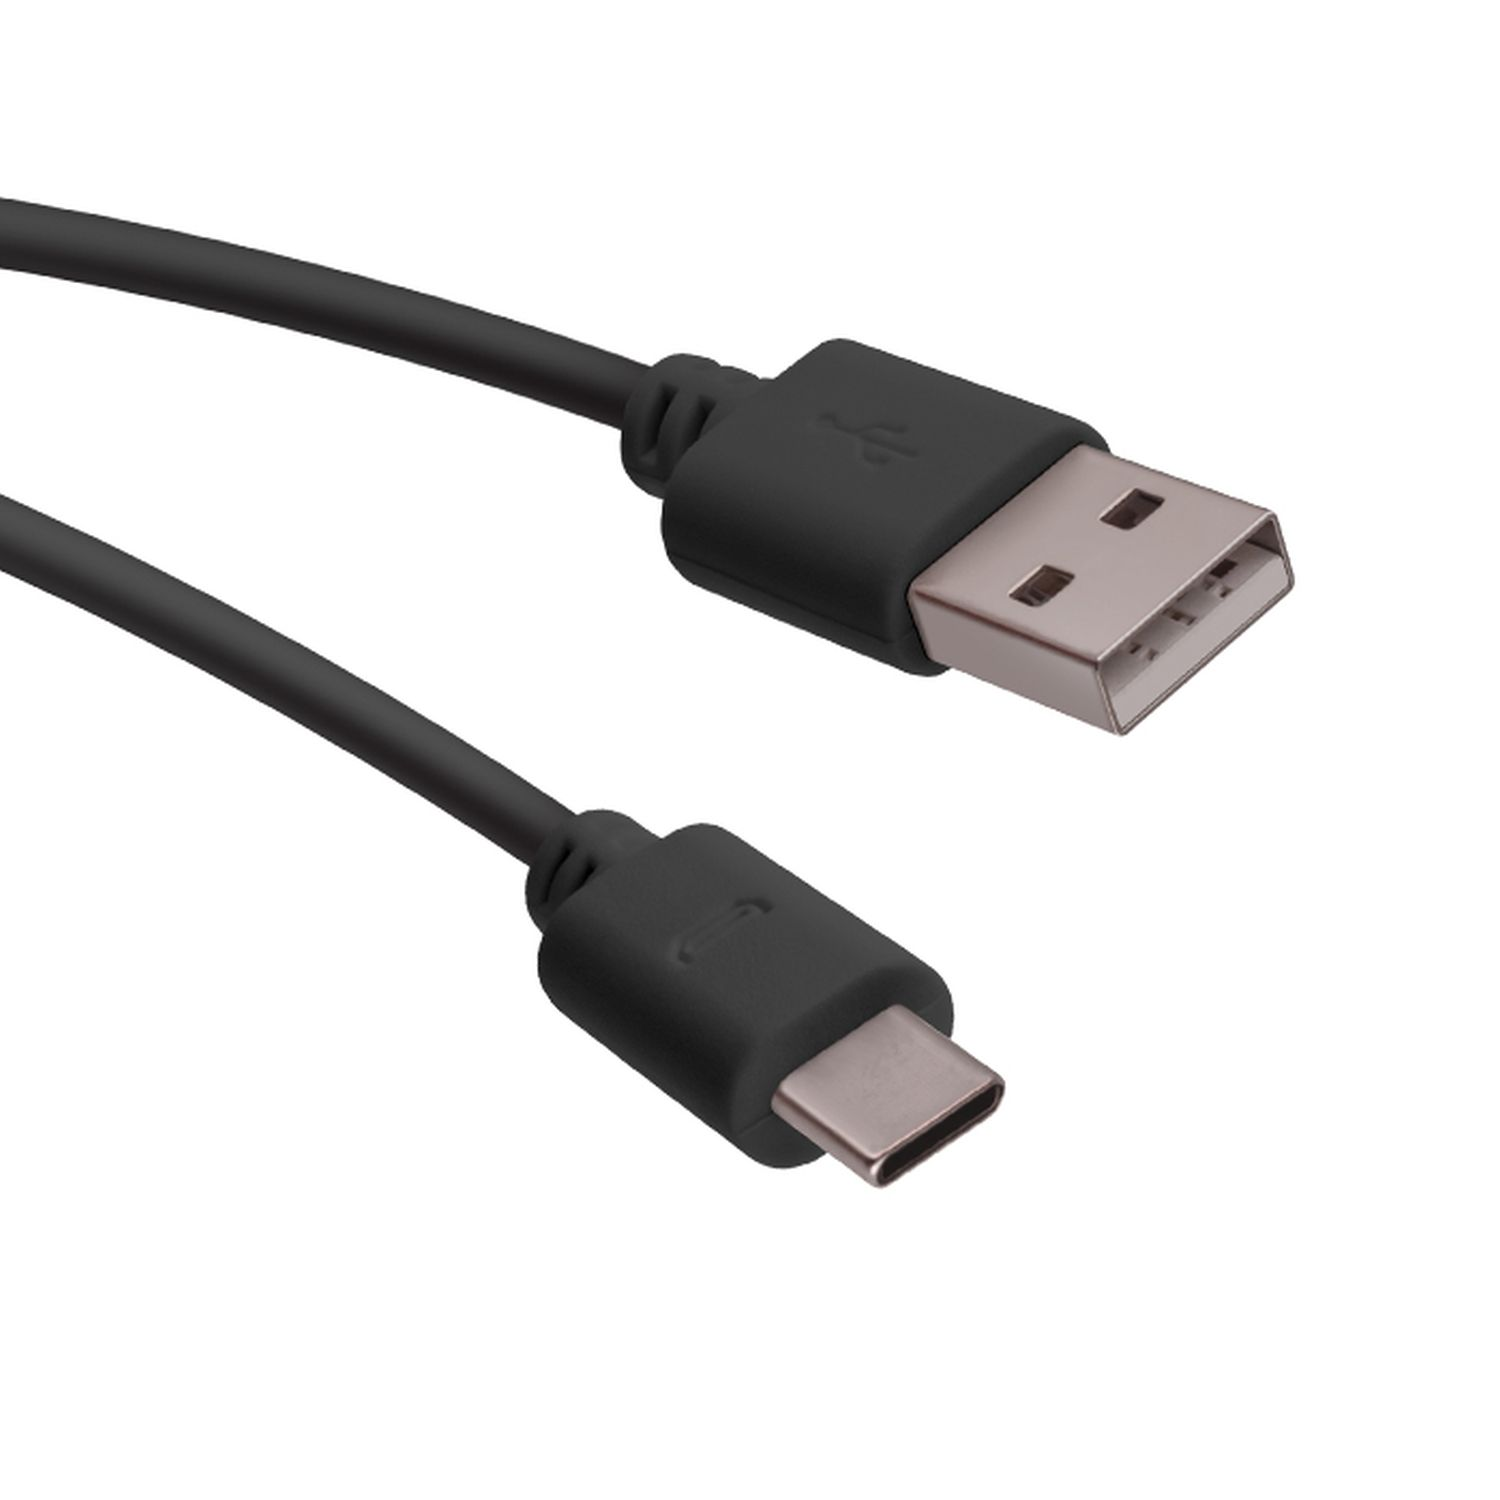 USB Kabel Ladekabel, FOREVER 3.1 Schwarz, 1m Ladekabel C Typ Datenkabel Schwarz